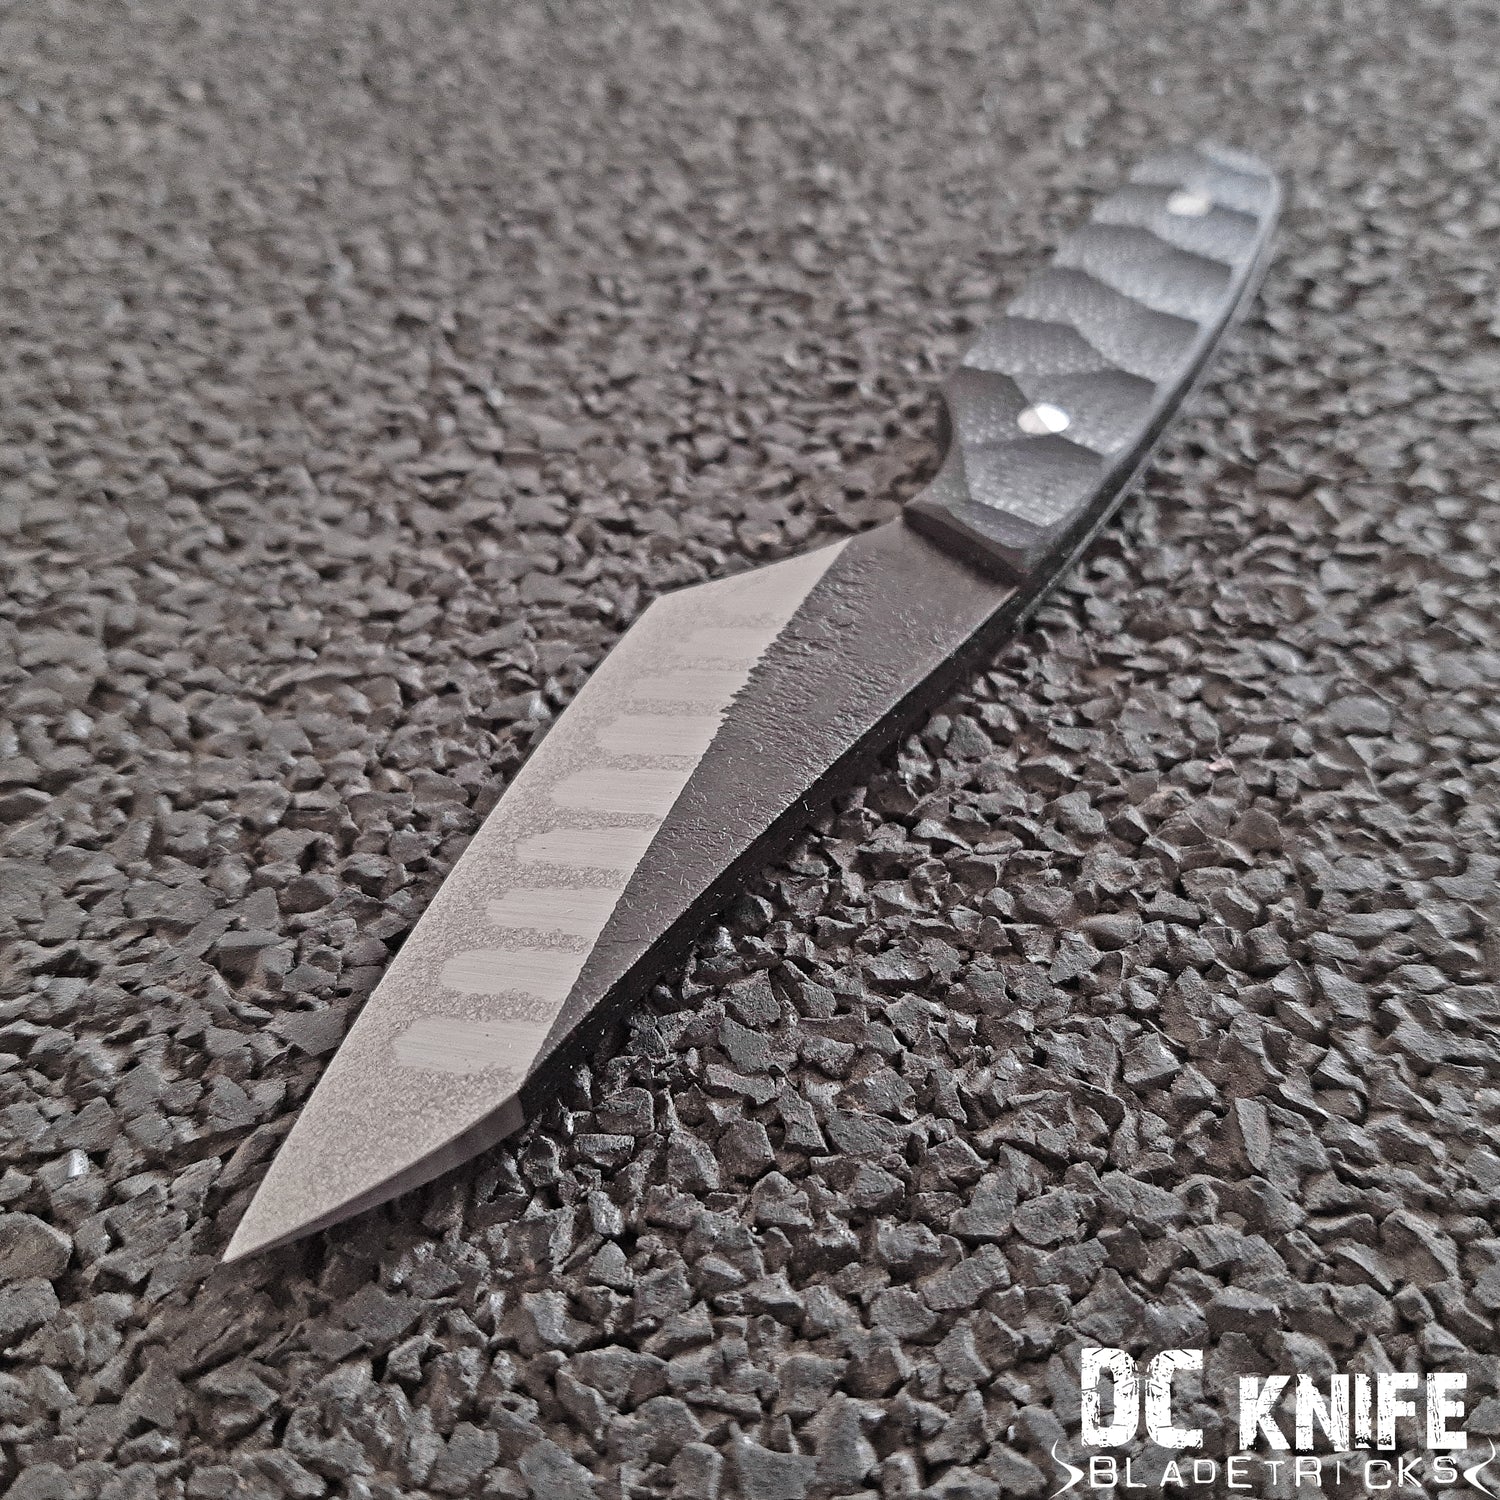 Tactical edccustom knife